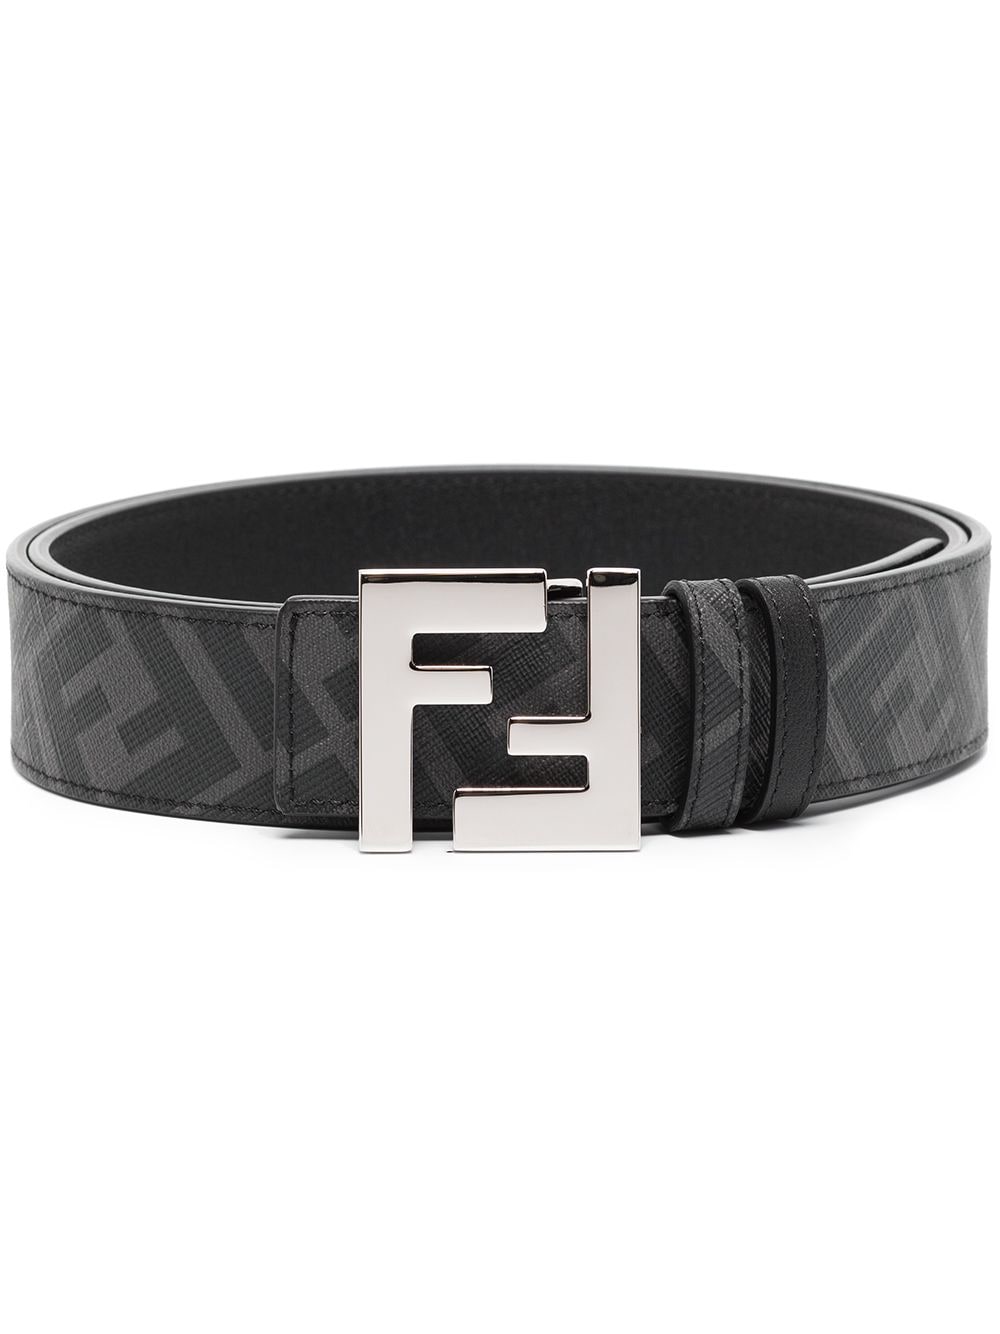 Image 1 of FENDI FF-logo reversible leather belt